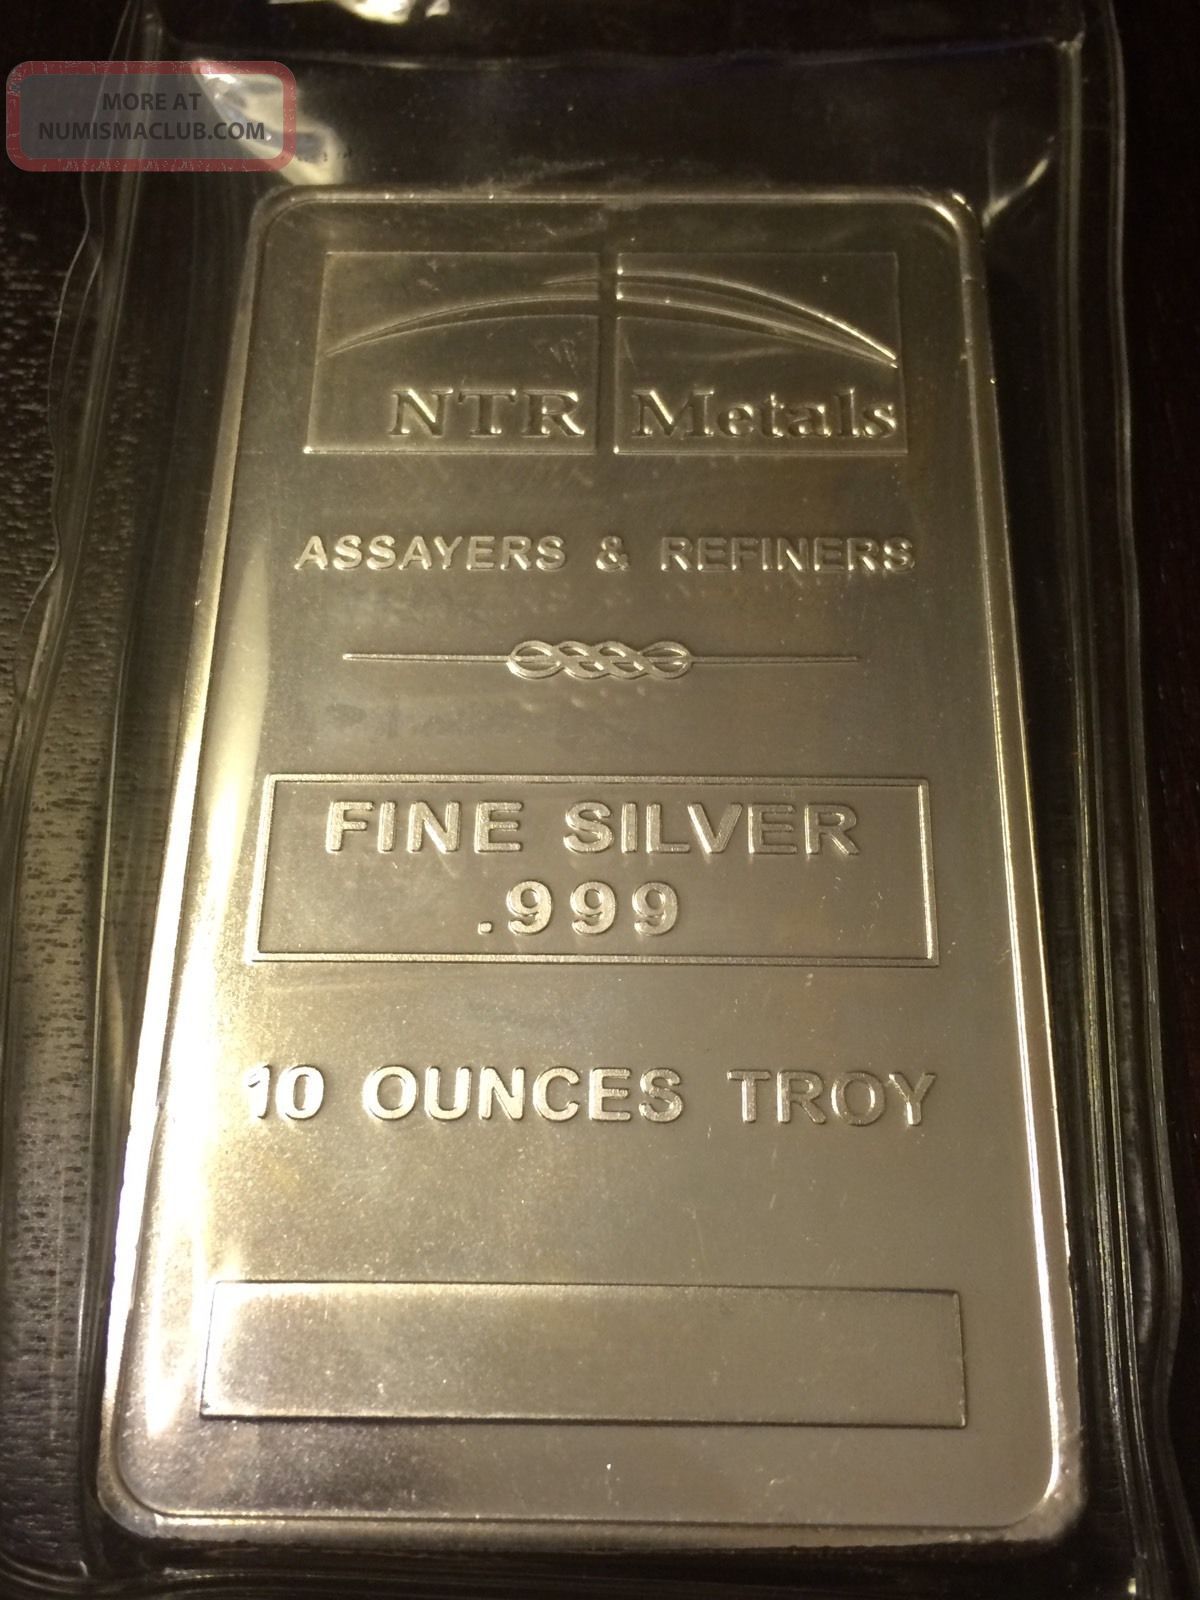 engelhard silver bar serial number p333735